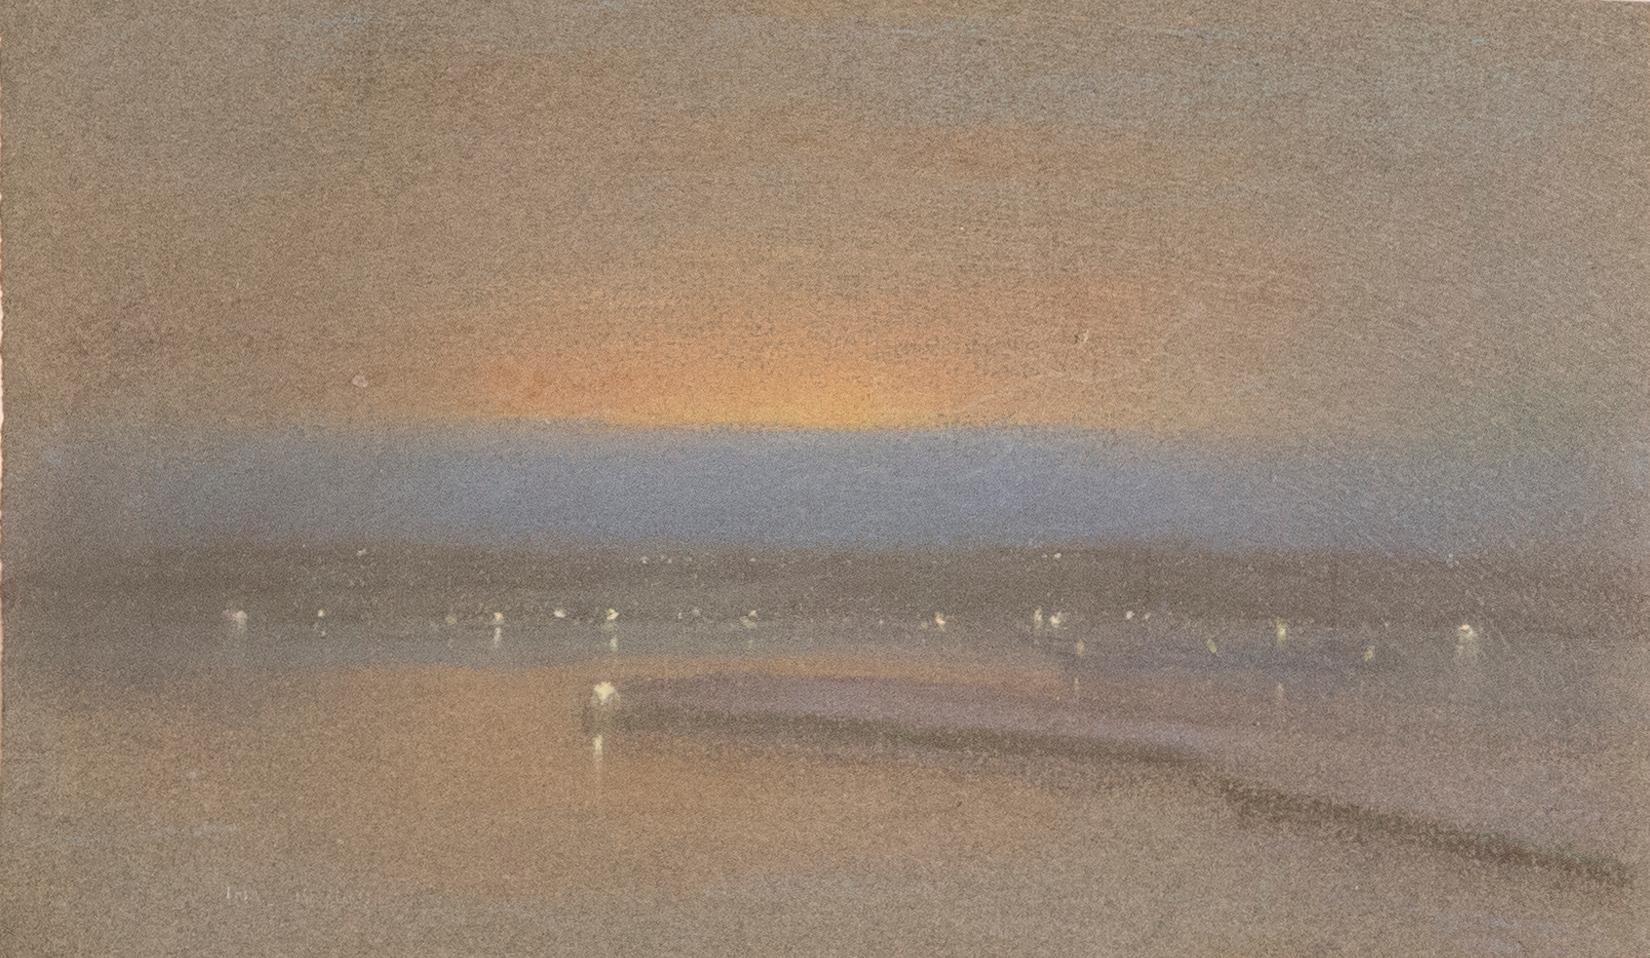 Sunset River - Tonalisme Painting par Johann Berthelsen